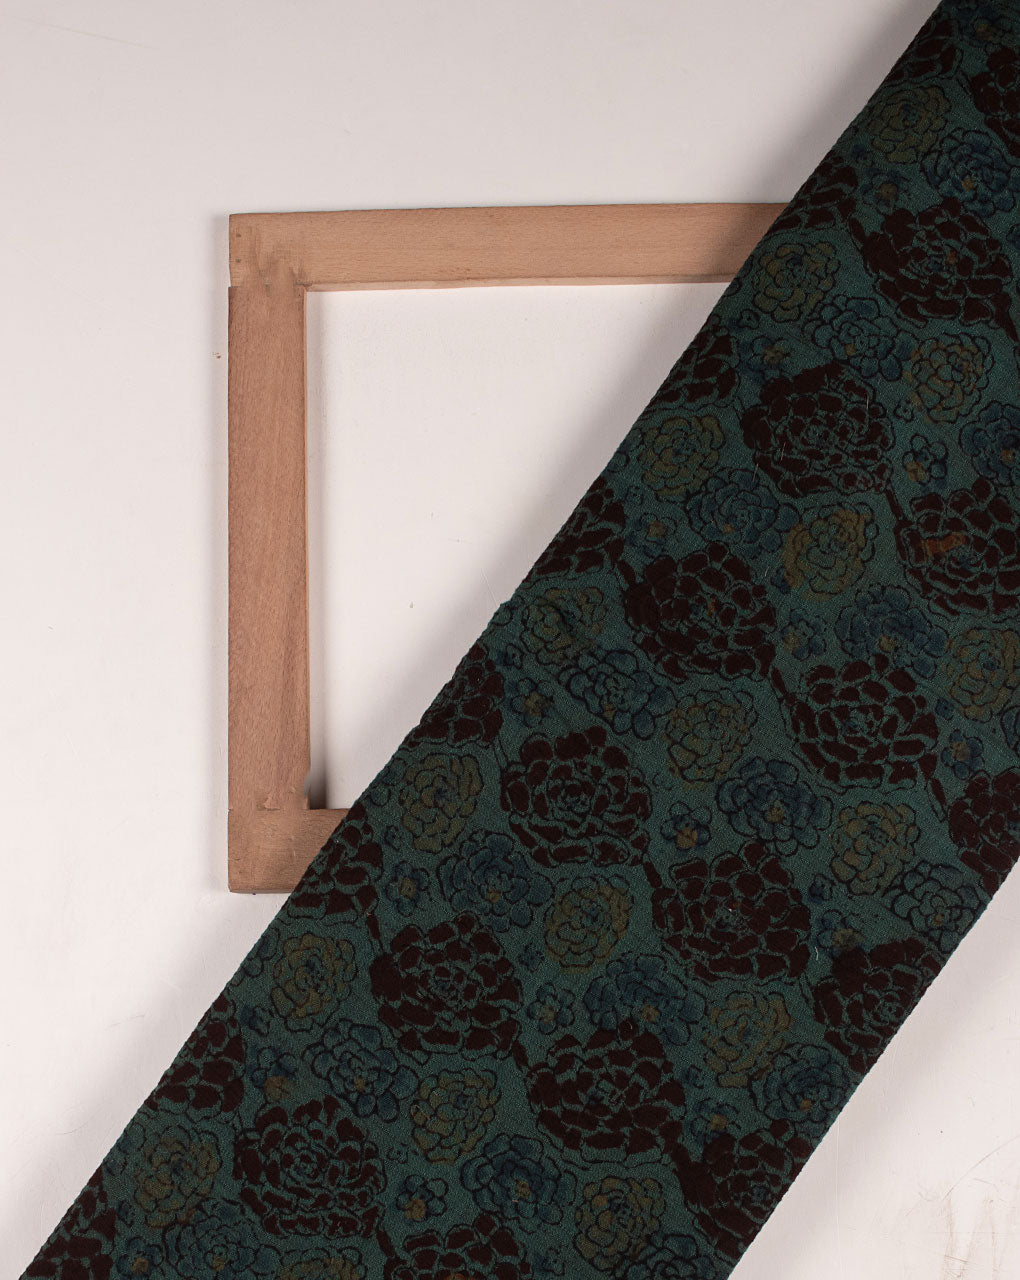 Kalamkari Hand Block Loom Textured Cotton Fabric - Fabriclore.com